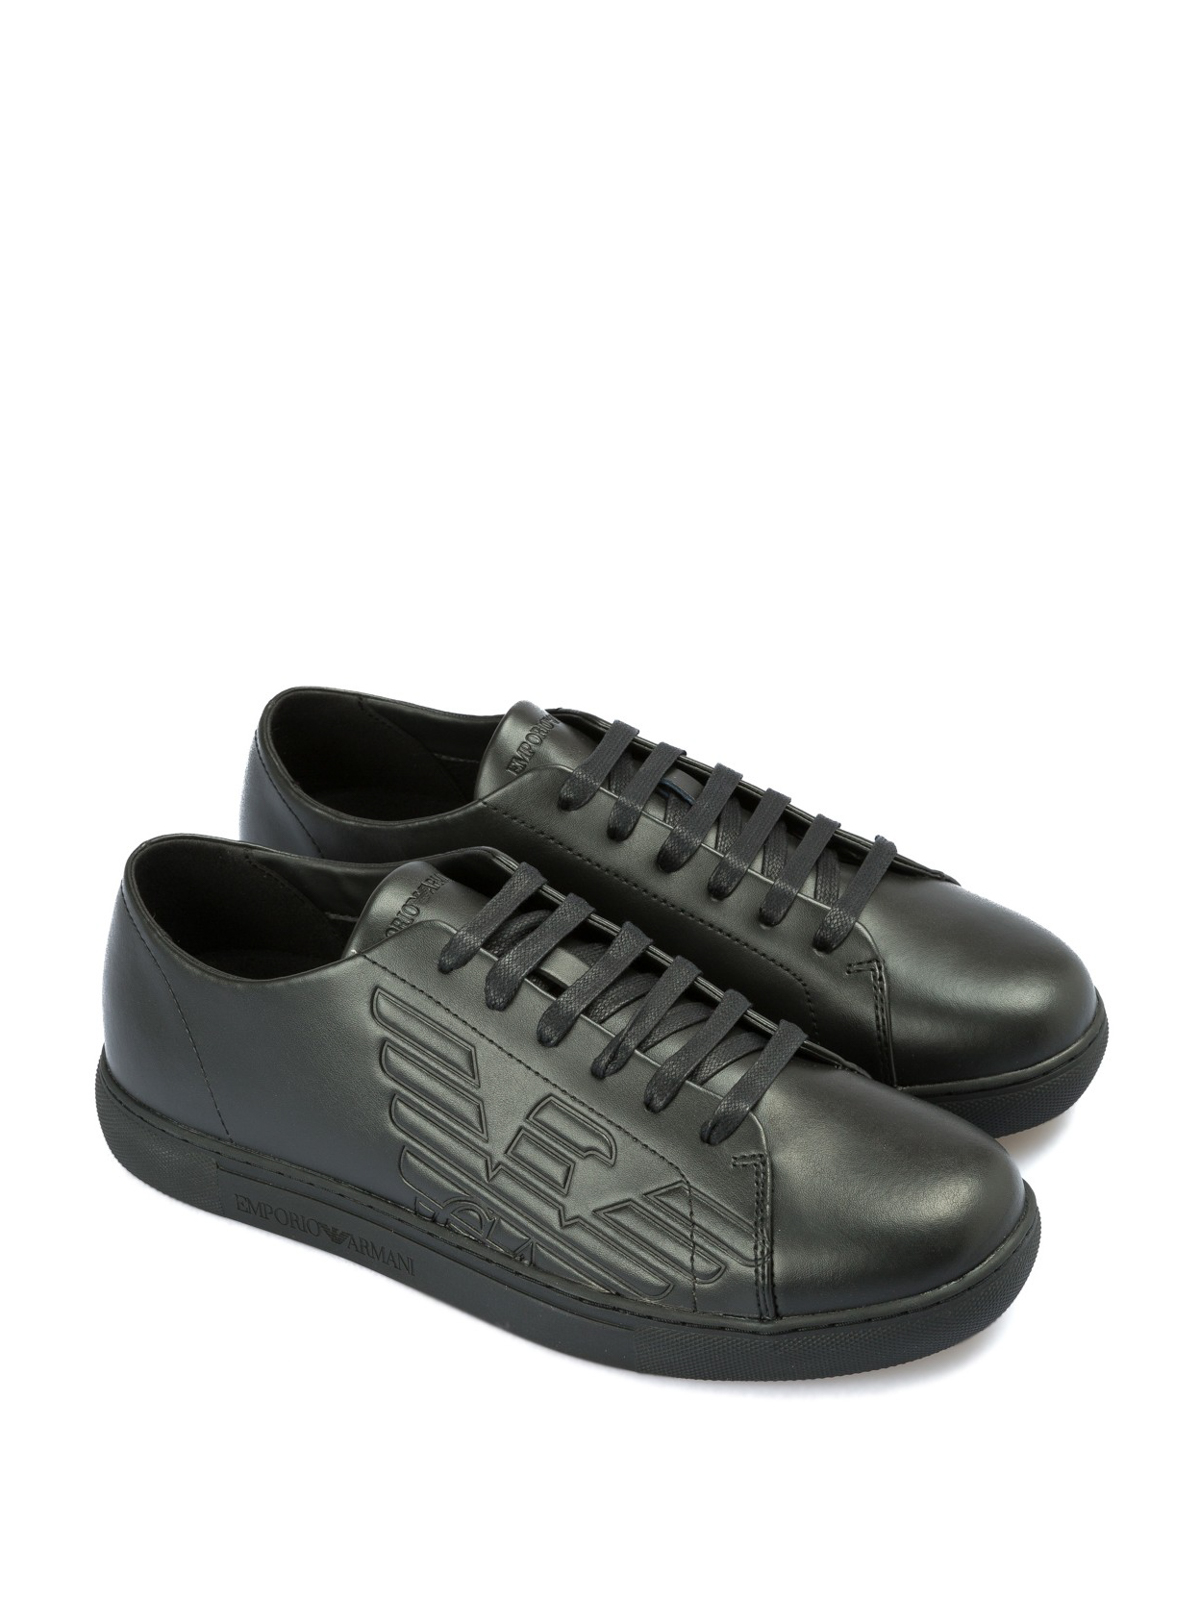 emporio armani leather sneakers